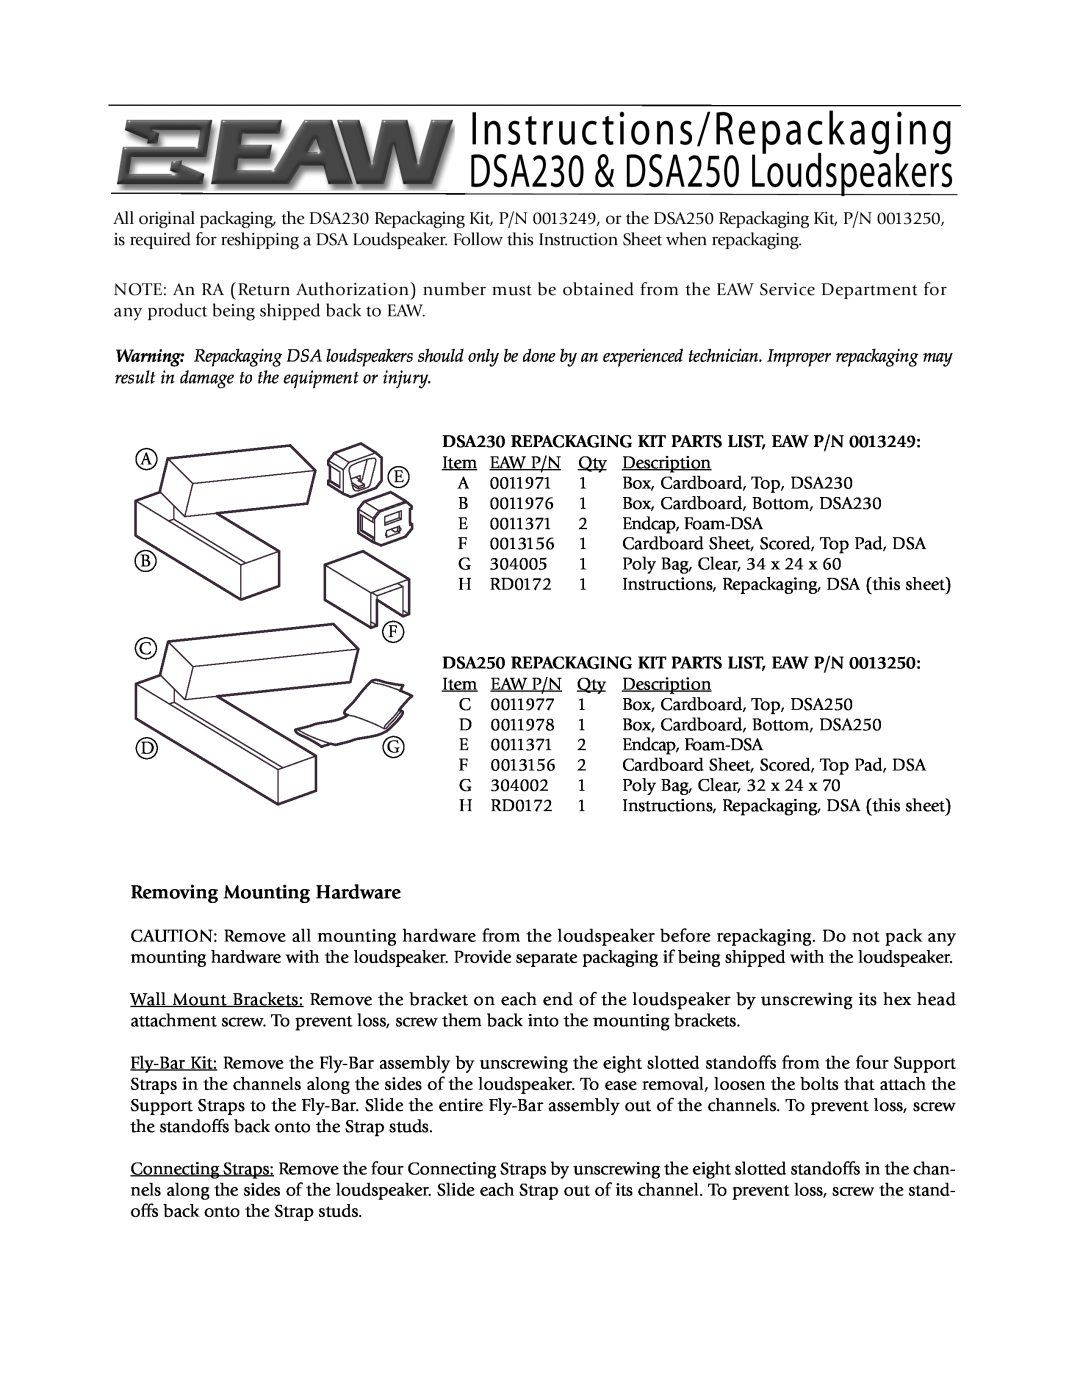 EAW instruction sheet Removing Mounting Hardware, Instruc tions/Repack aging, DSA230 & DSA250 Loudspeakers 